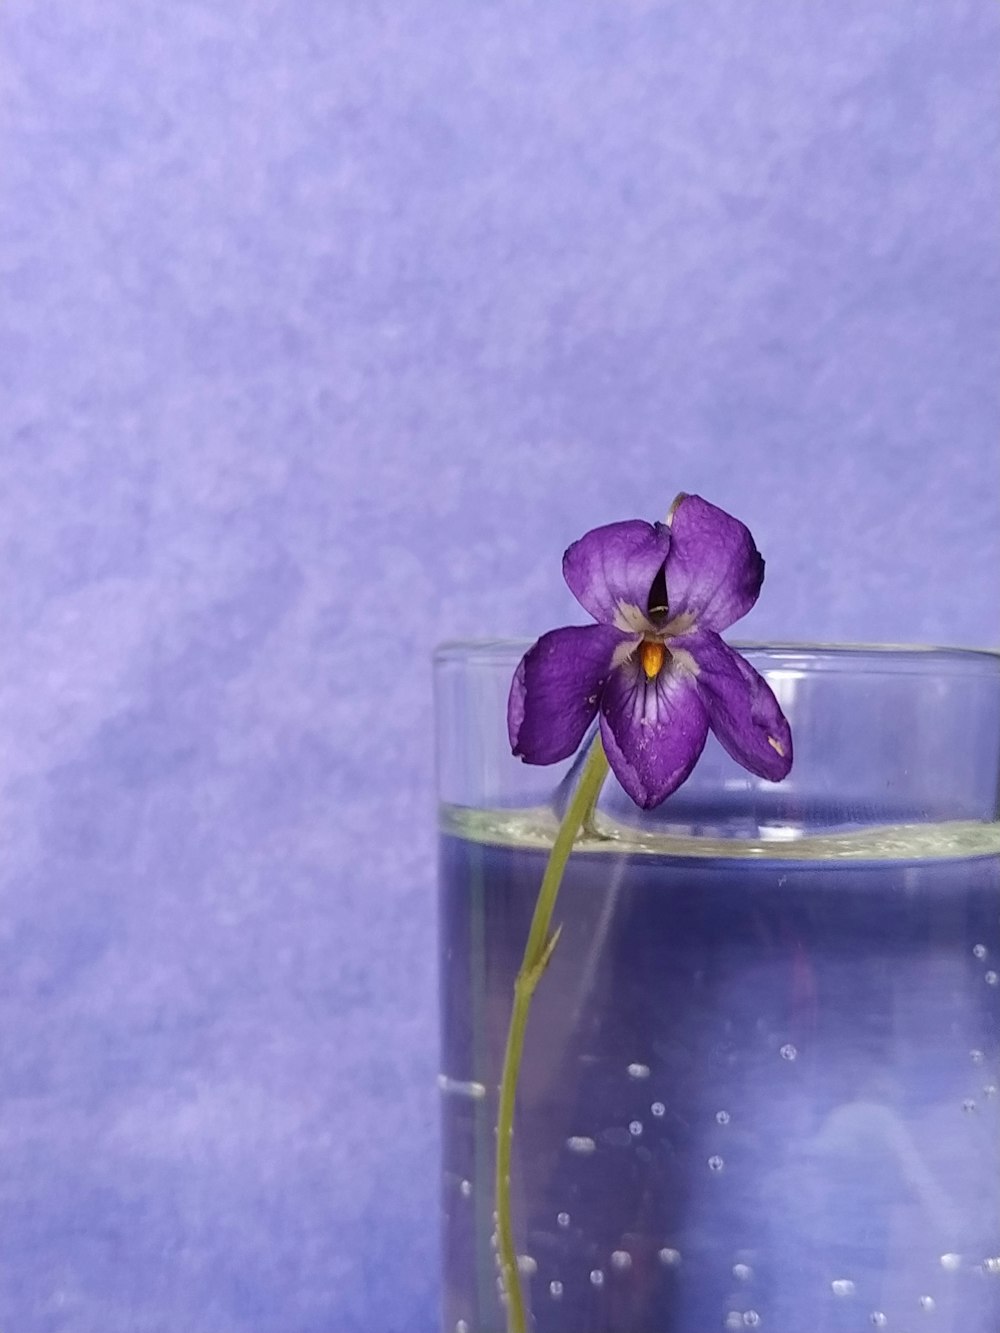 a purple flower in a glass of water